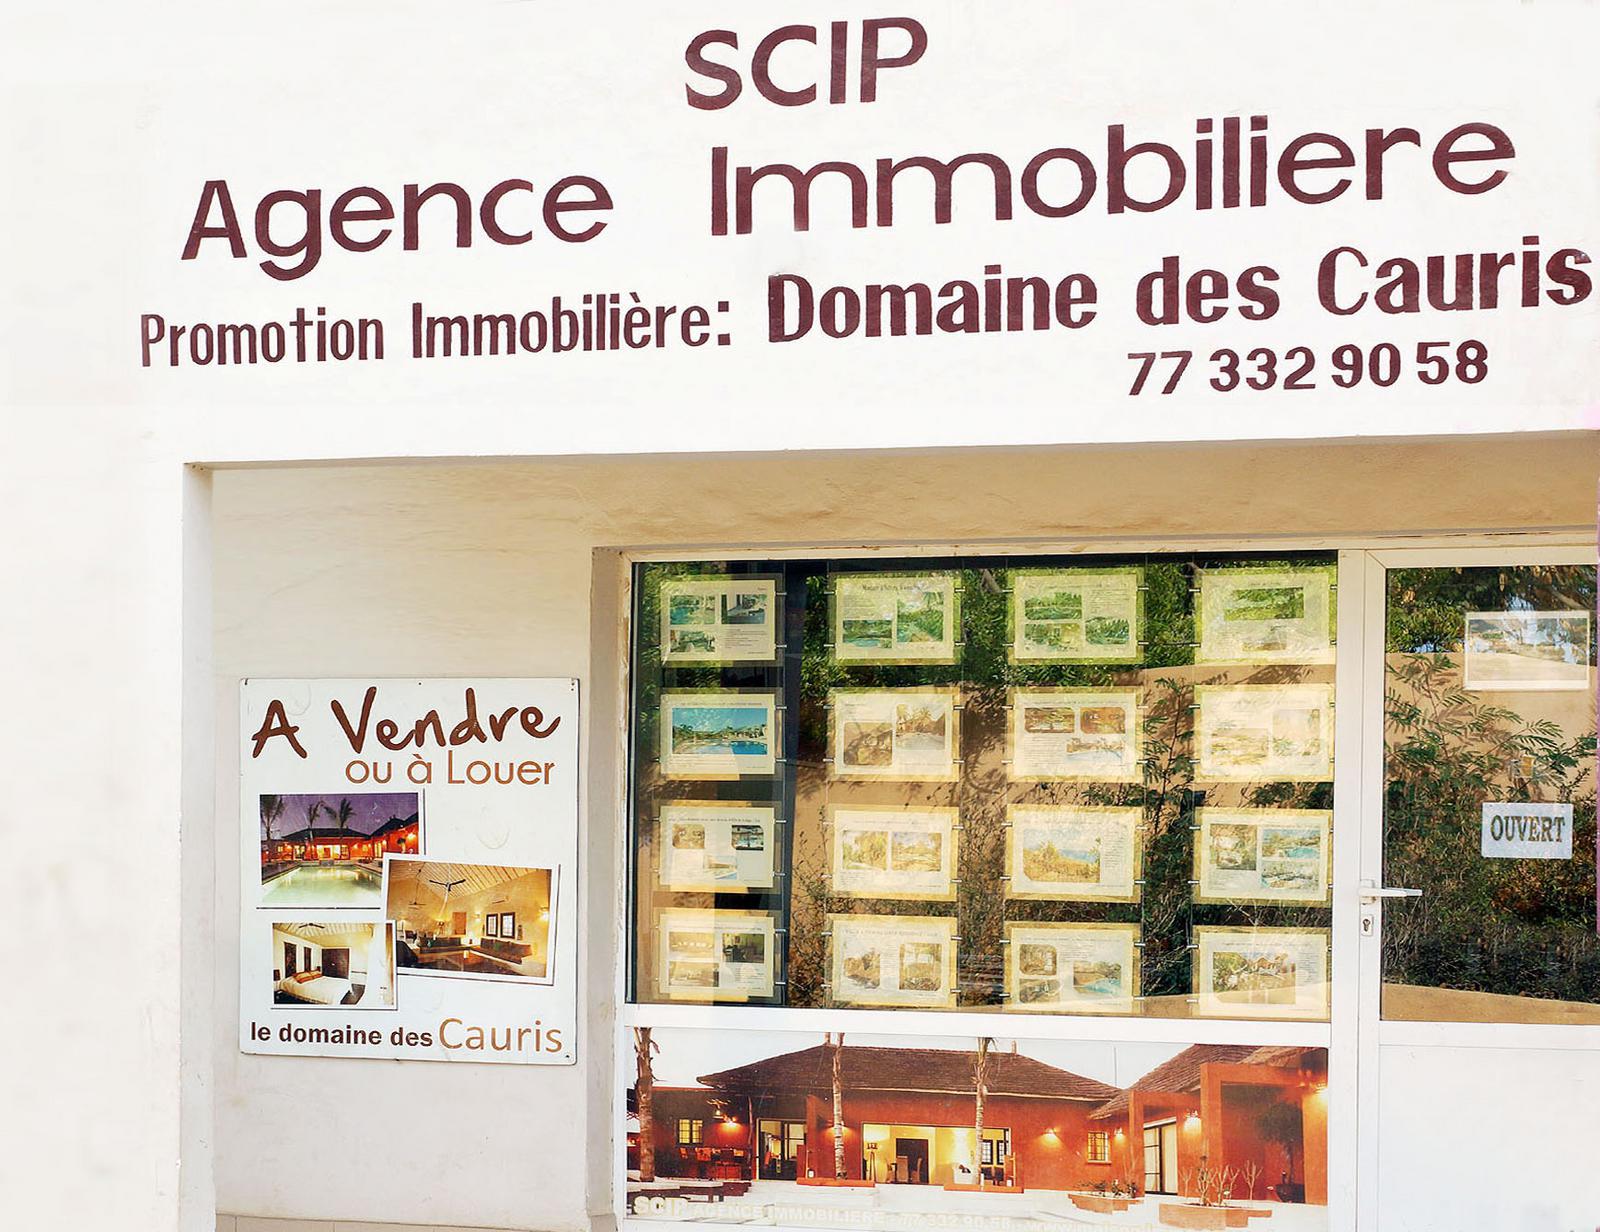 Agence Immobilière SCIP, Saly, Sénégal.